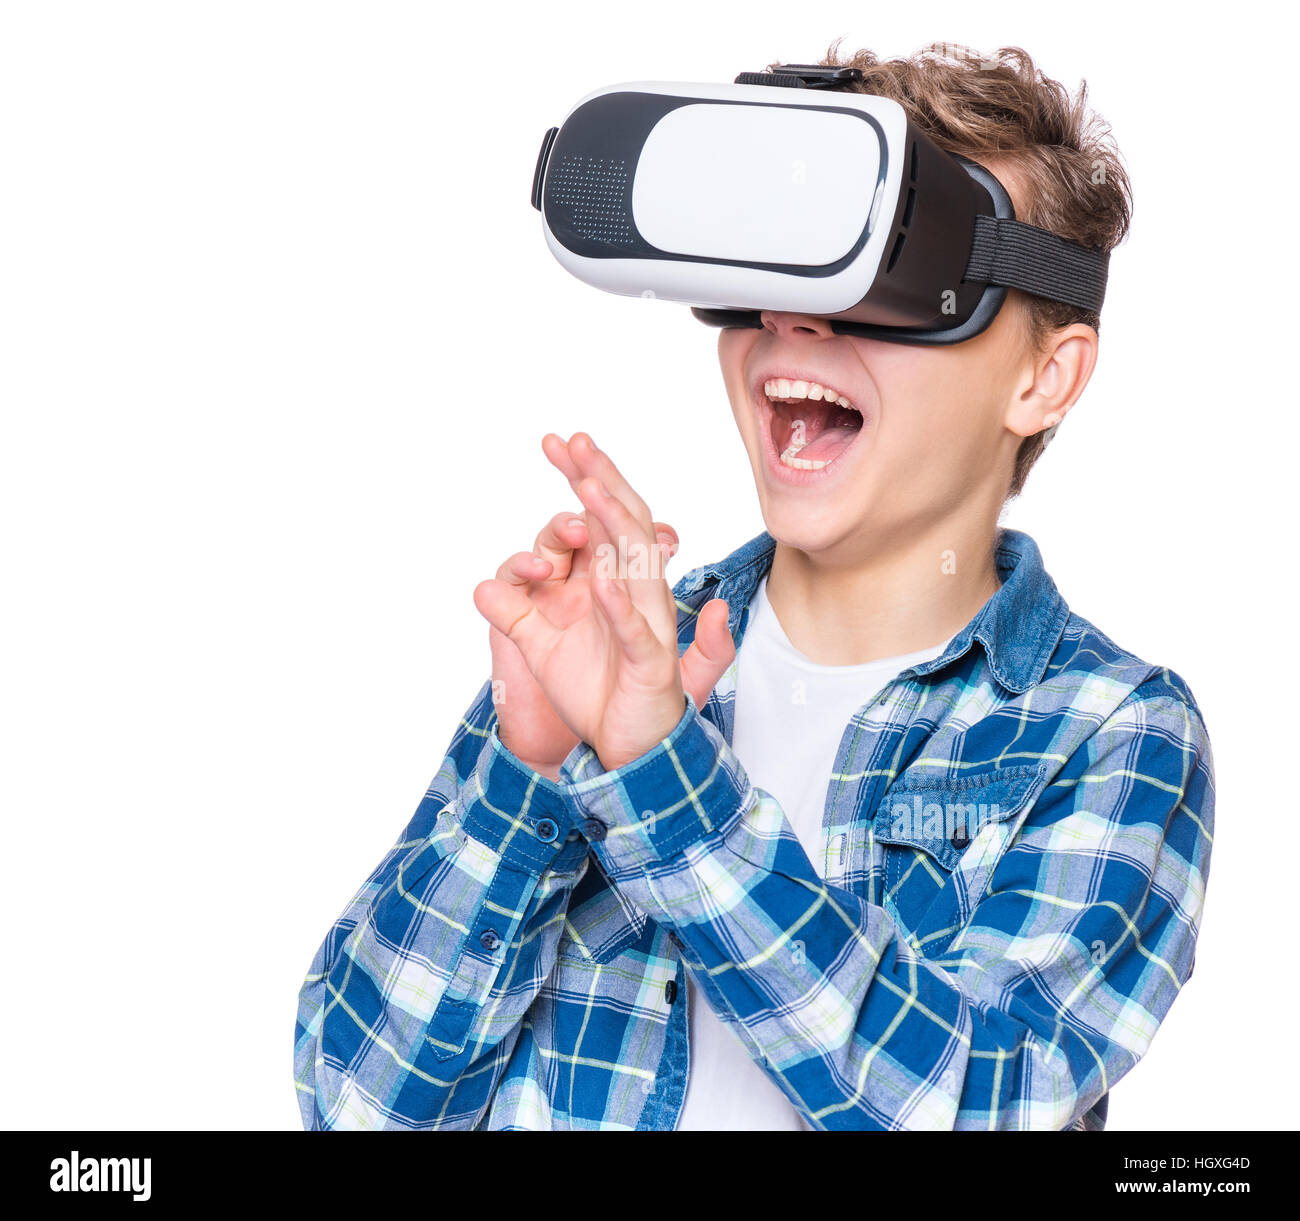 Teen boy in VR glasses Stock Photo